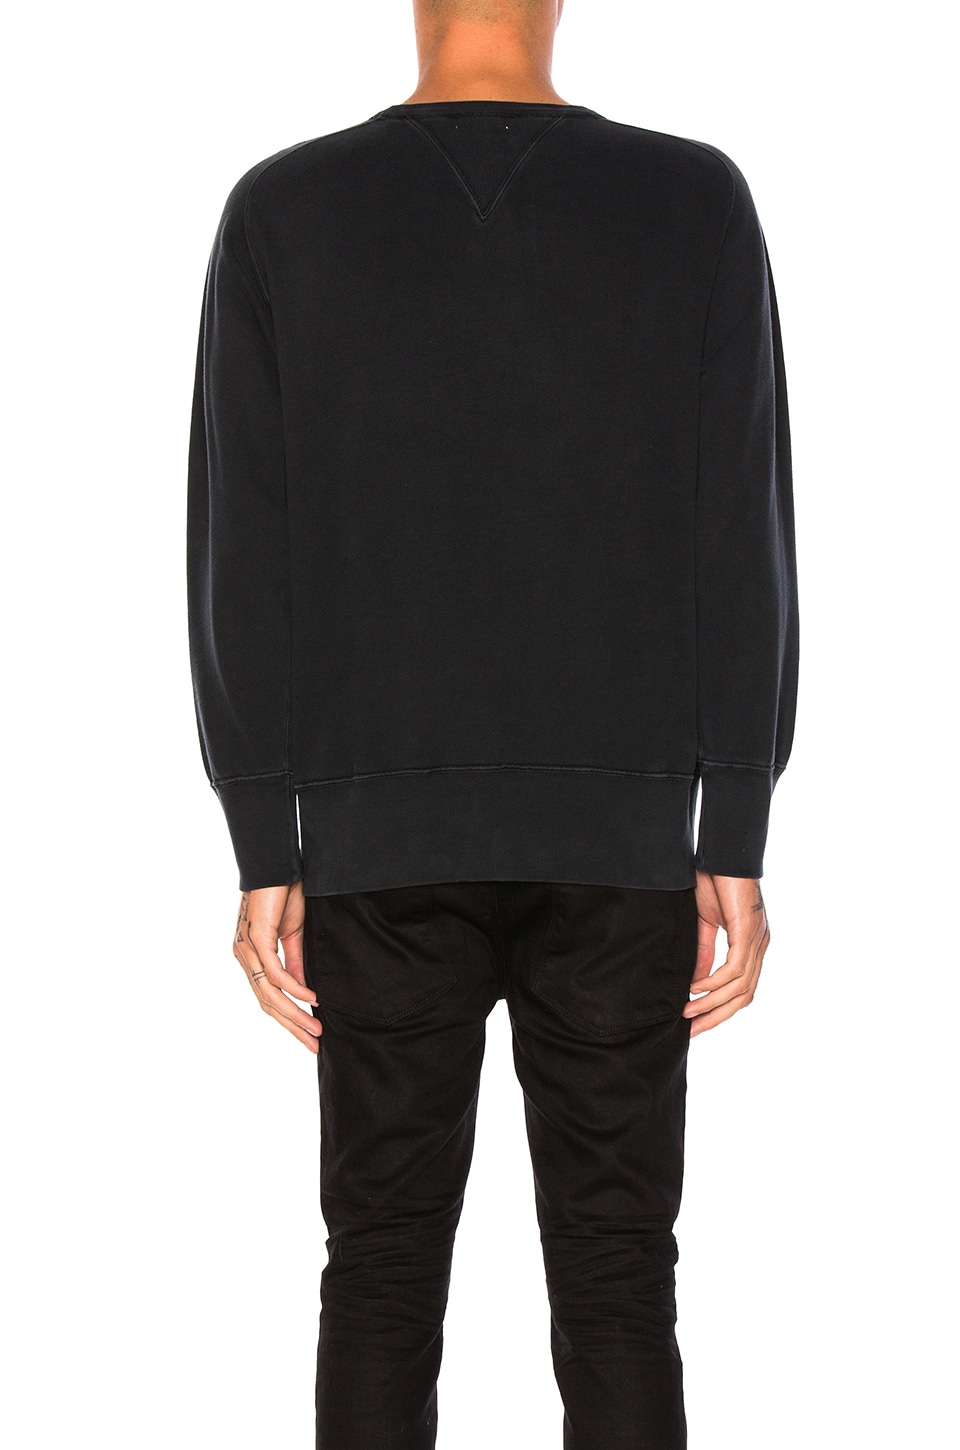 LEVI'S Vintage Clothing Bay Meadows Sweatshirt in Black | REVOLVE